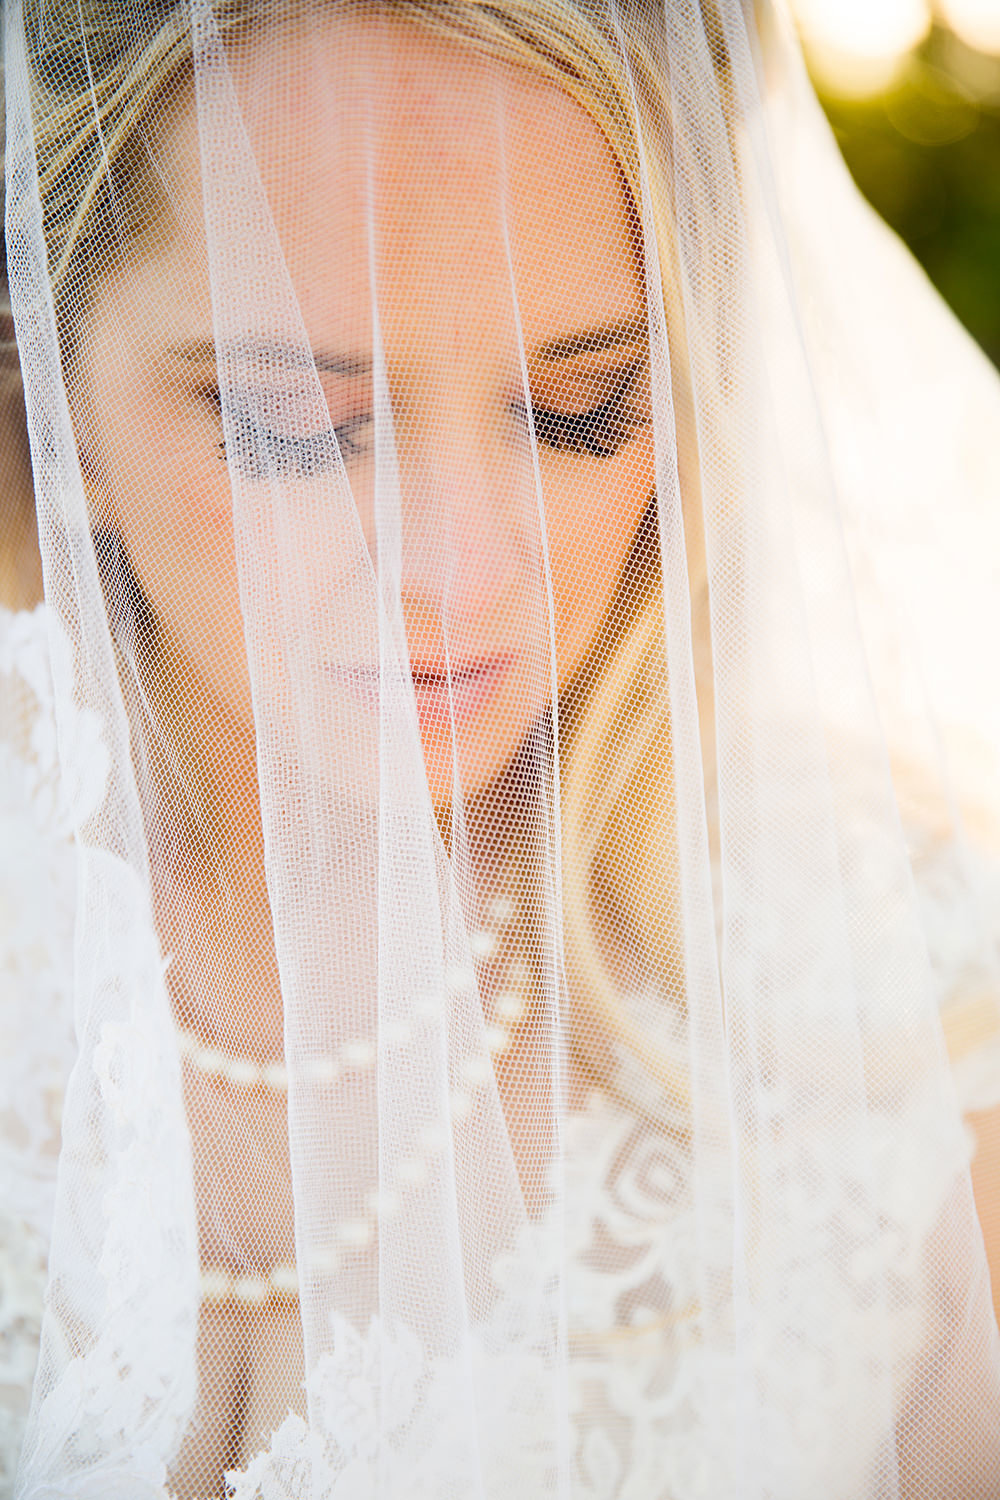 Candid bridal portrait through the veil